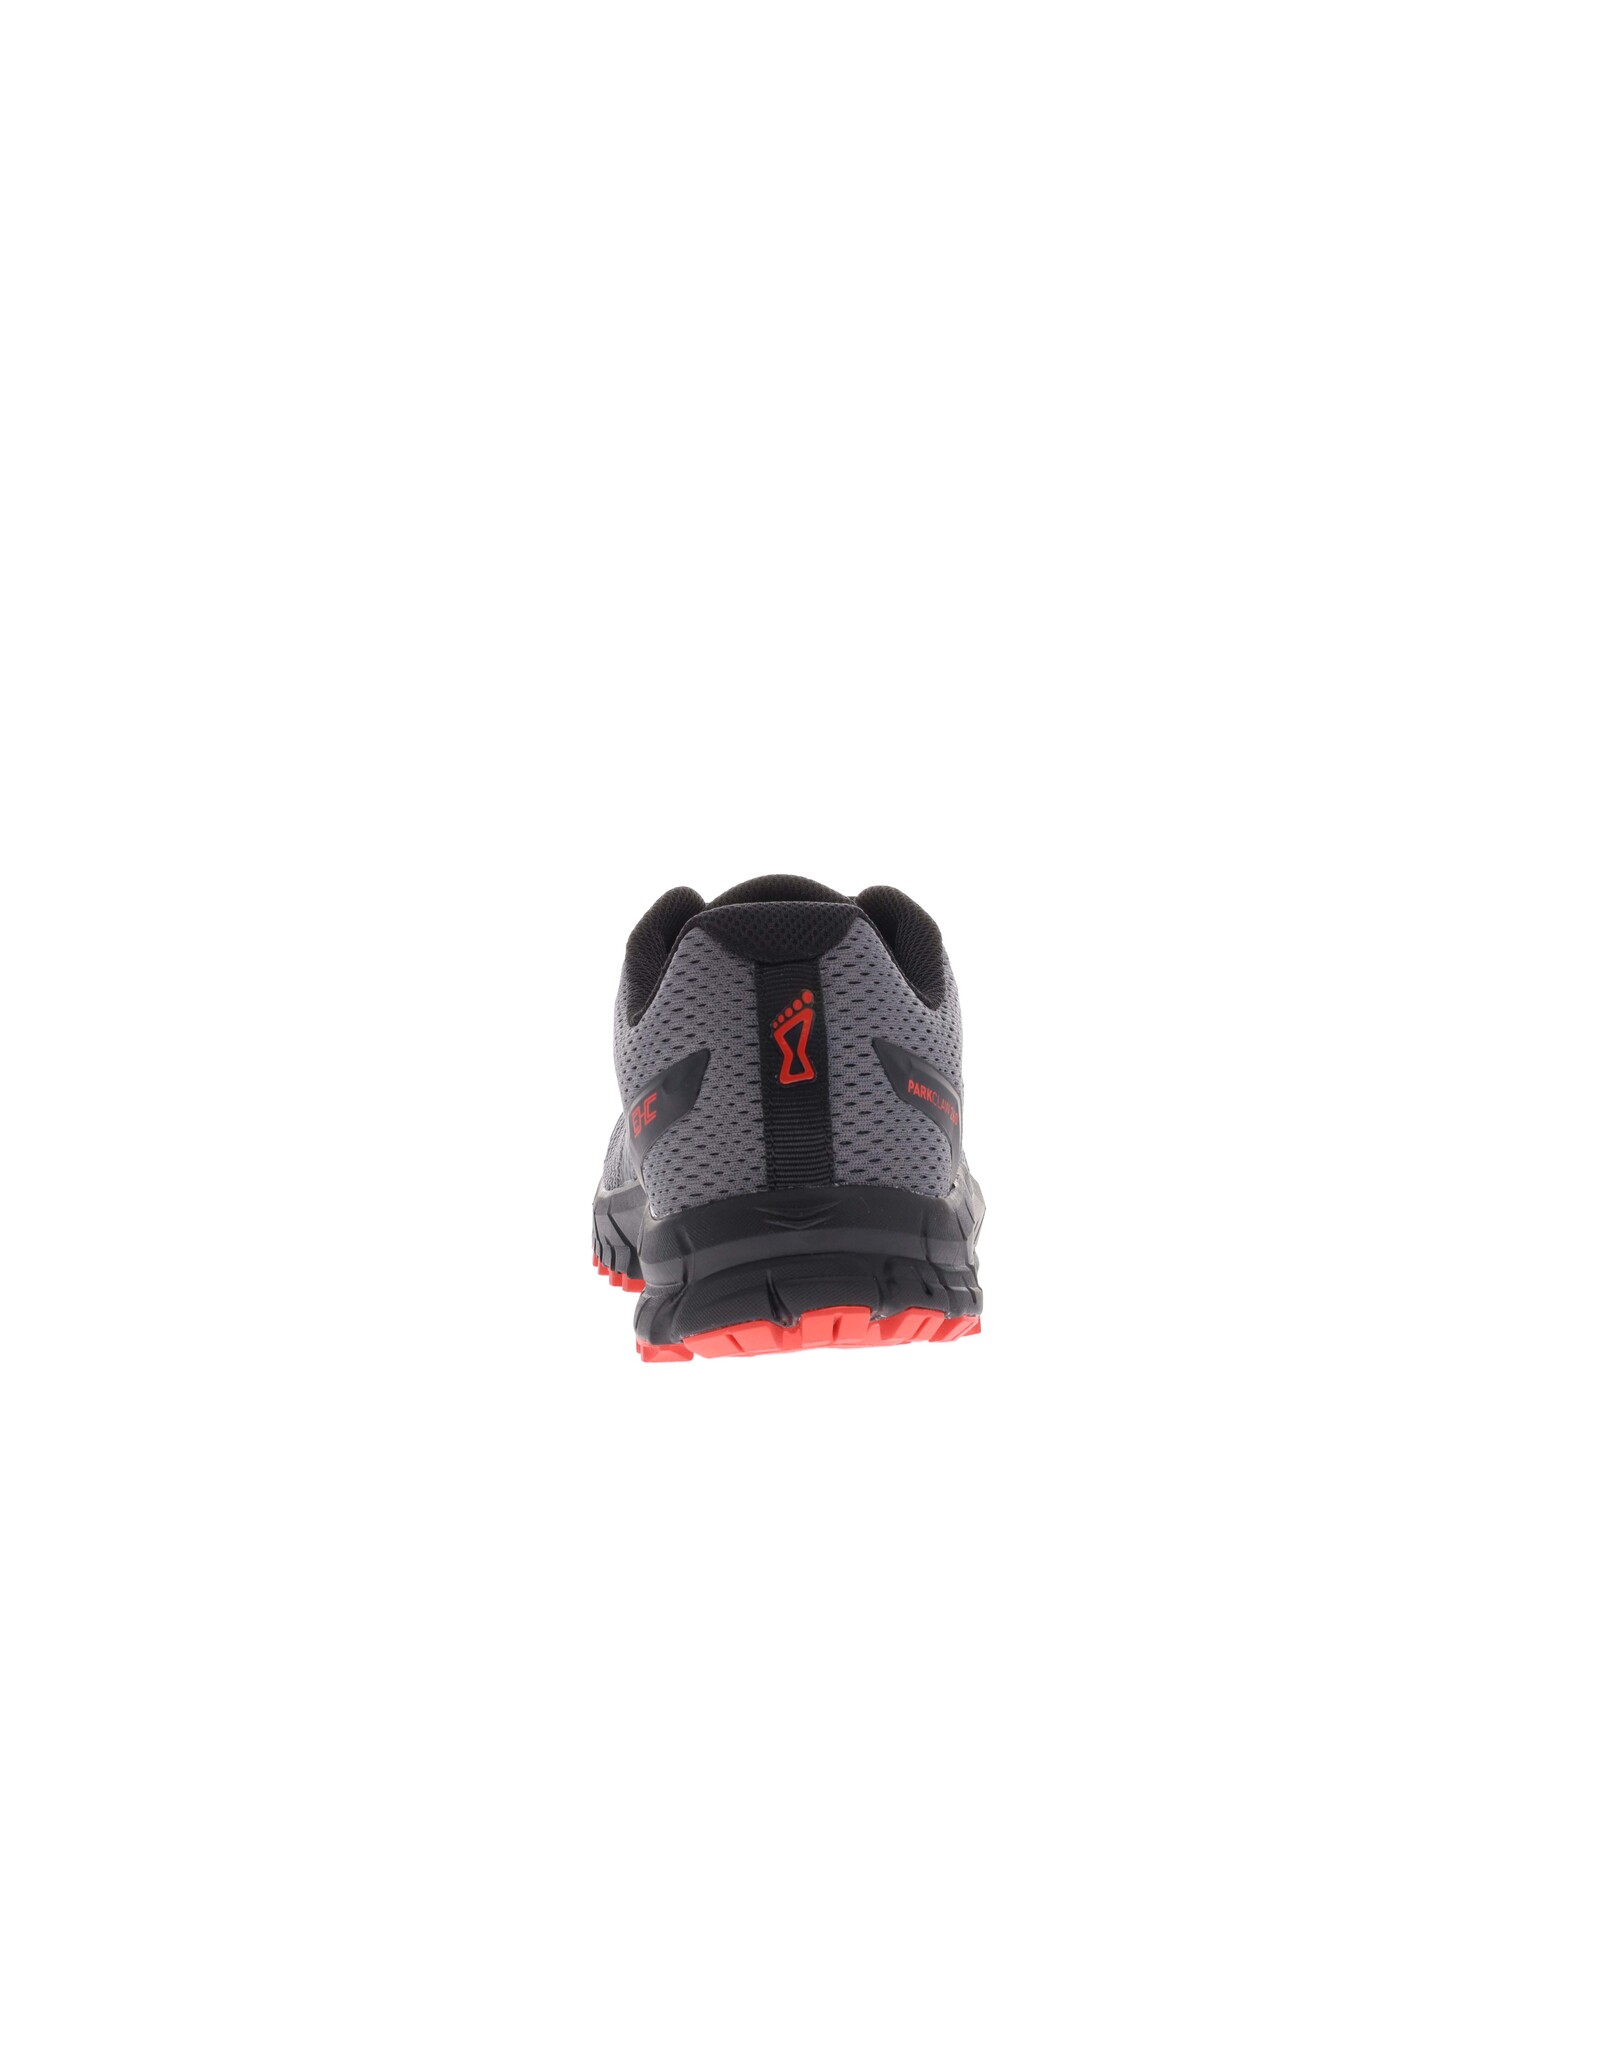 Inov-8 Parkclaw 260 Knit - Heren - Grey/Black/Red